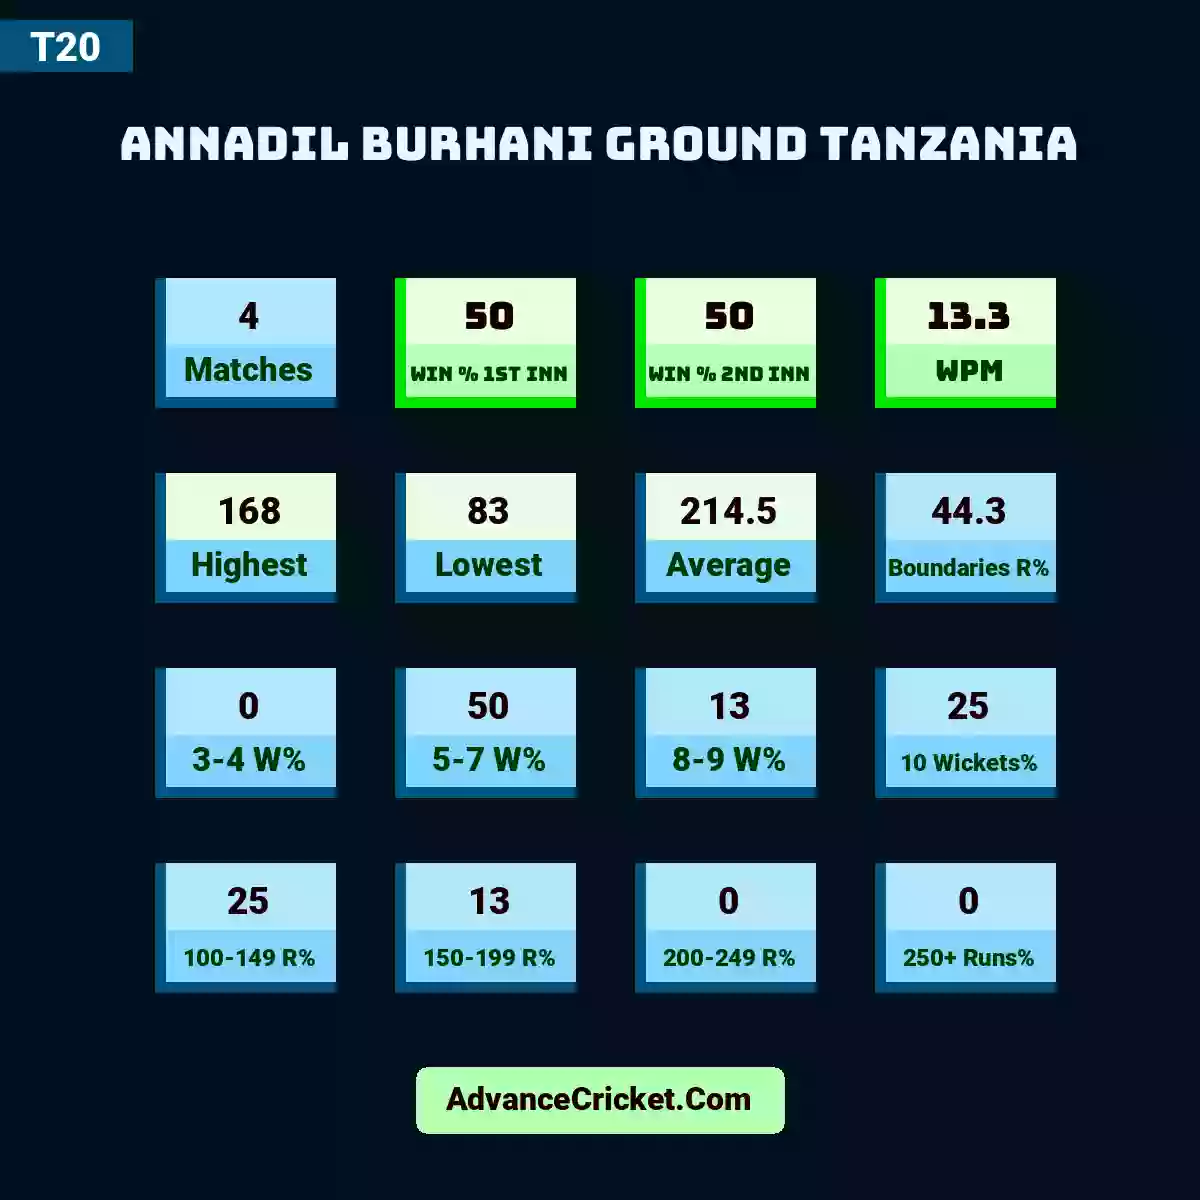 Image showing Annadil Burhani Ground Tanzania with Matches: 4, Win % 1st Inn: 50, Win % 2nd Inn: 50, WPM: 13.3, Highest: 168, Lowest: 83, Average: 214.5, Boundaries R%: 44.3, 3-4 W%: 0, 5-7 W%: 50, 8-9 W%: 13, 10 Wickets%: 25, 100-149 R%: 25, 150-199 R%: 13, 200-249 R%: 0, 250+ Runs%: 0.